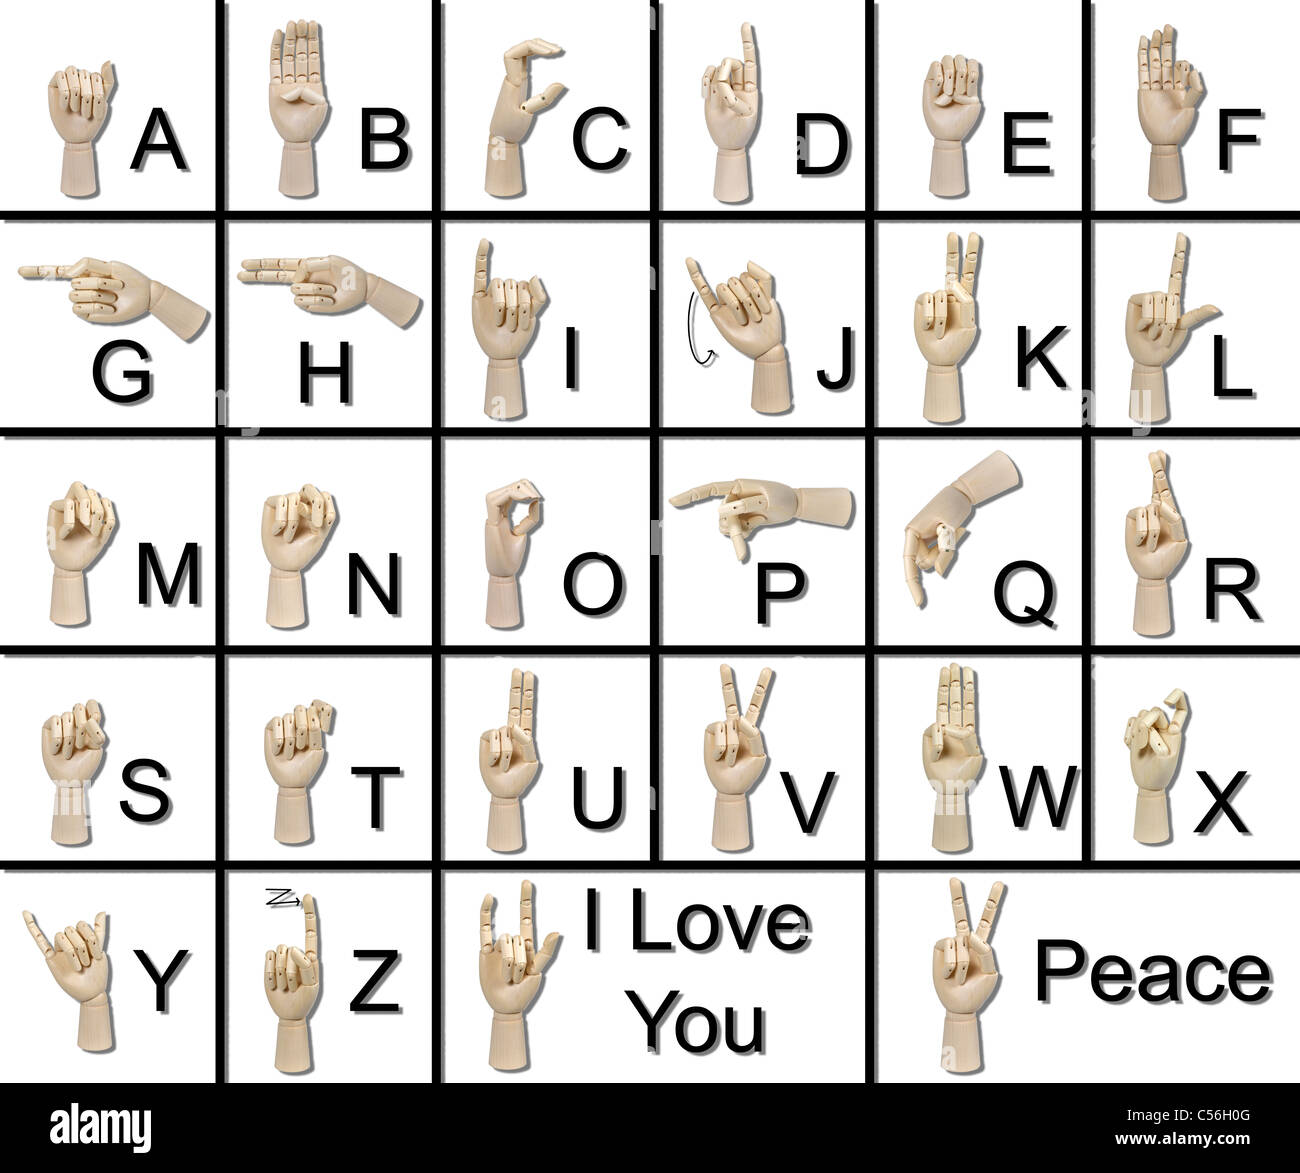 alphabet-sign-language-travis-dougherty-explains-and-demonstrates-the